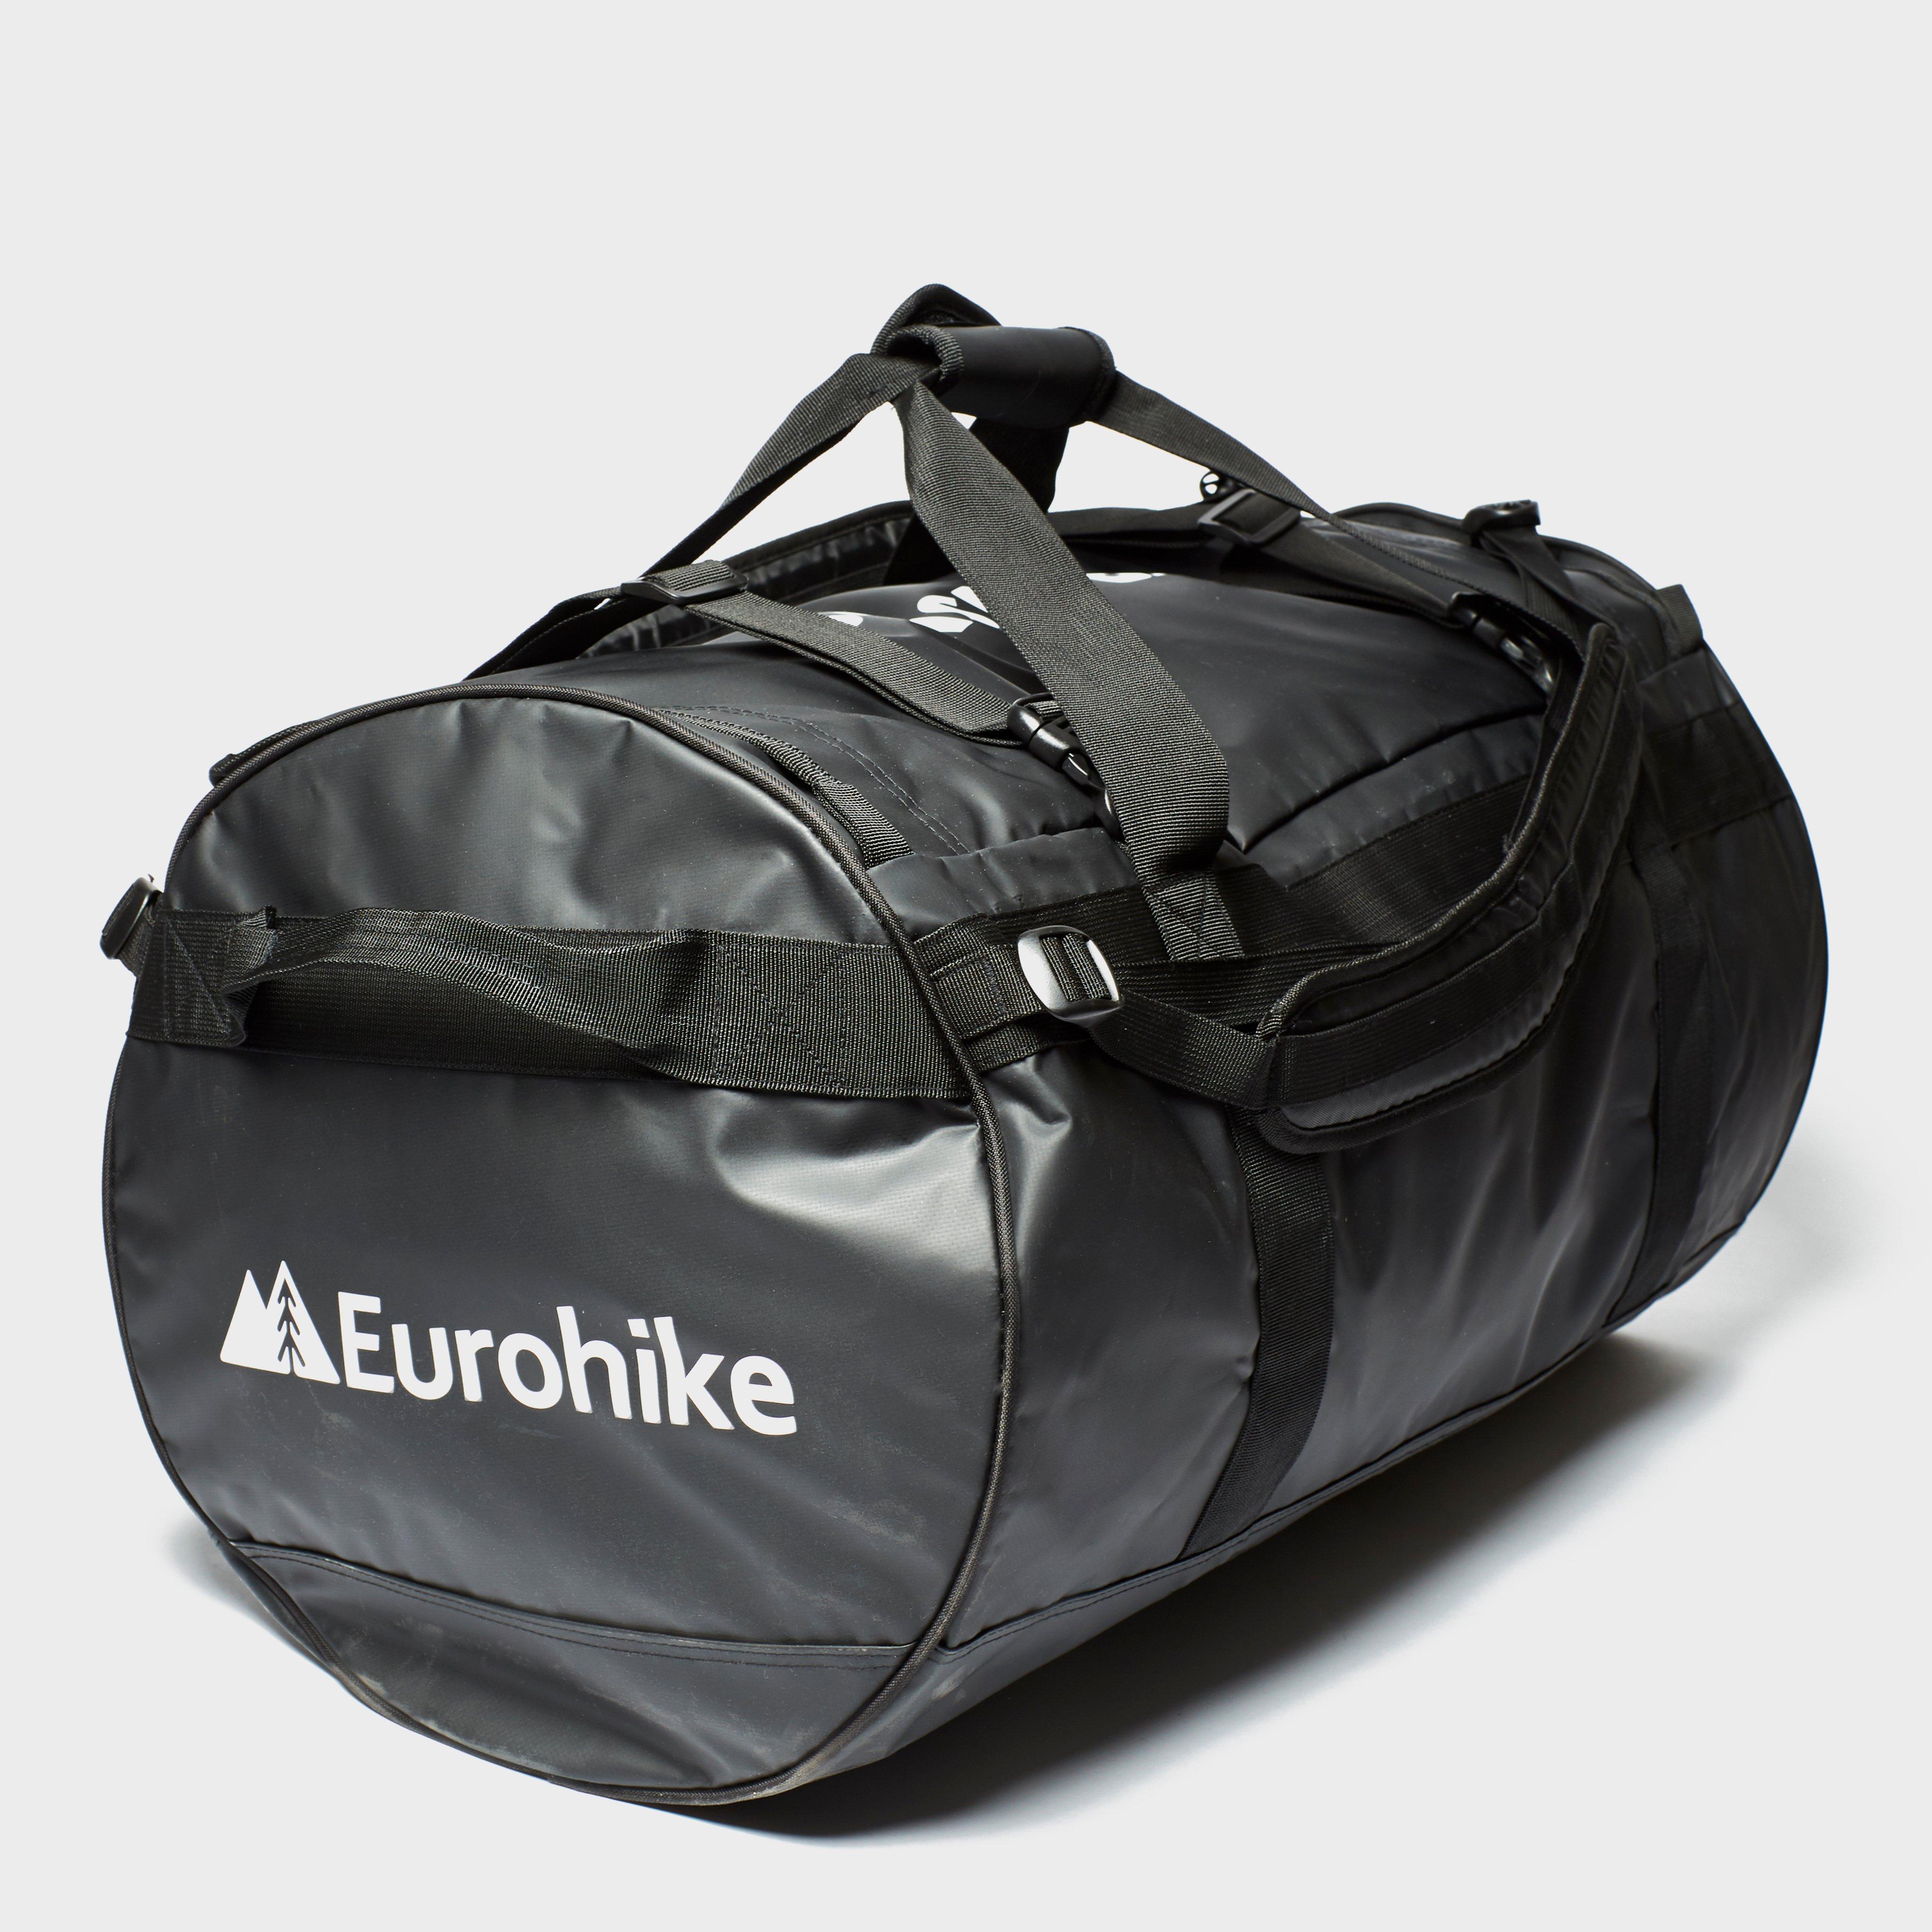 Eurohike Transit 90l Cargo Bag - Black/blk  Black/blk